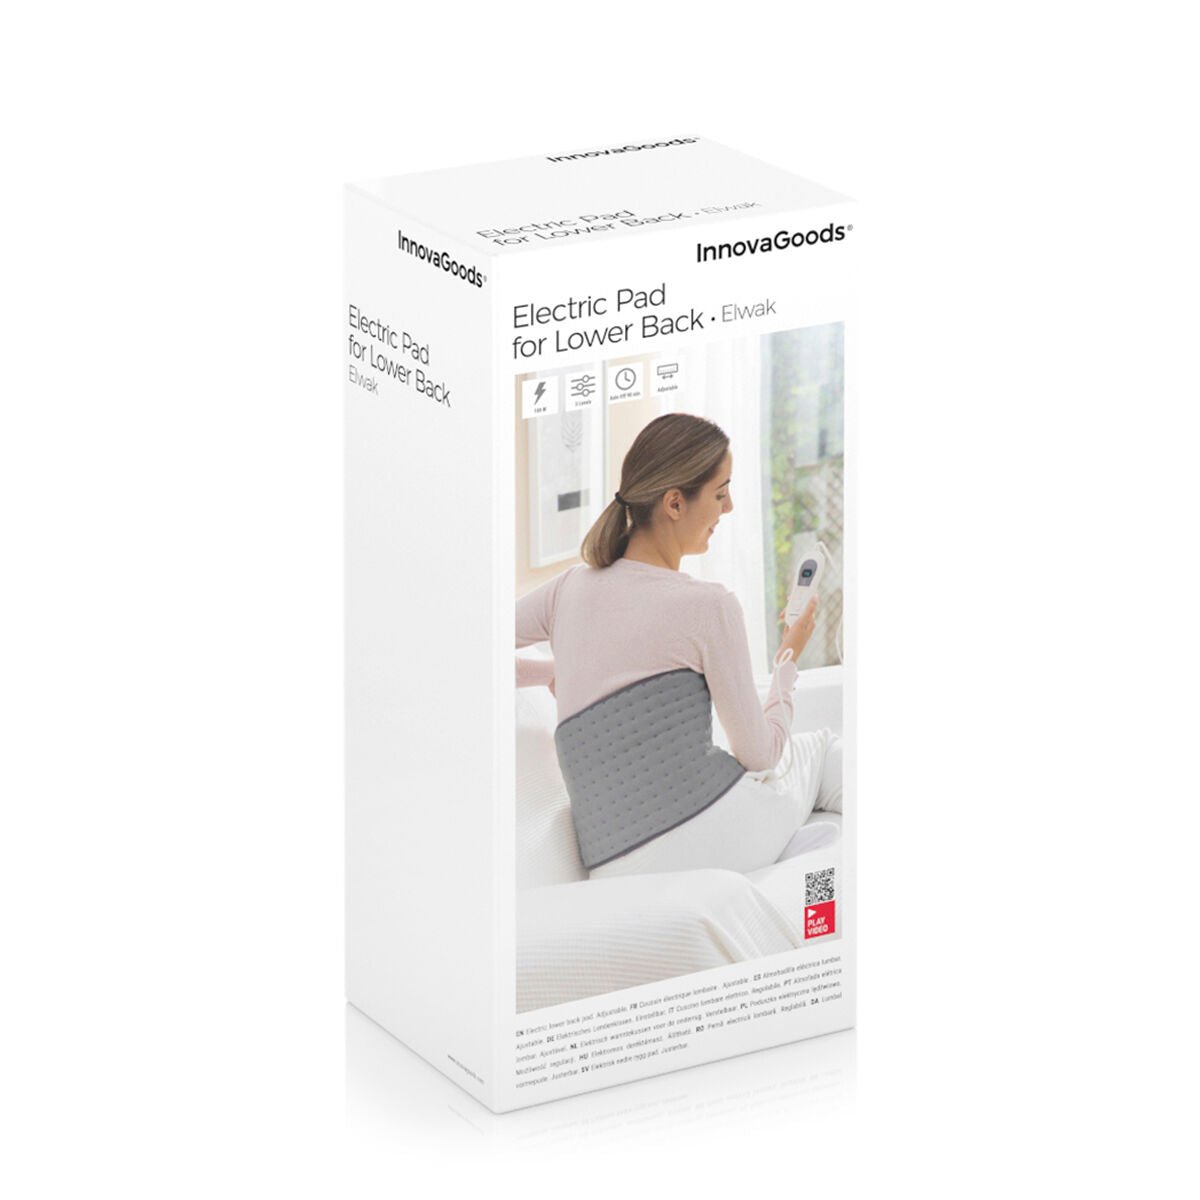 Adjustable Electric Lumbar Pad Elwak InnovaGoods - Calm Beauty IE